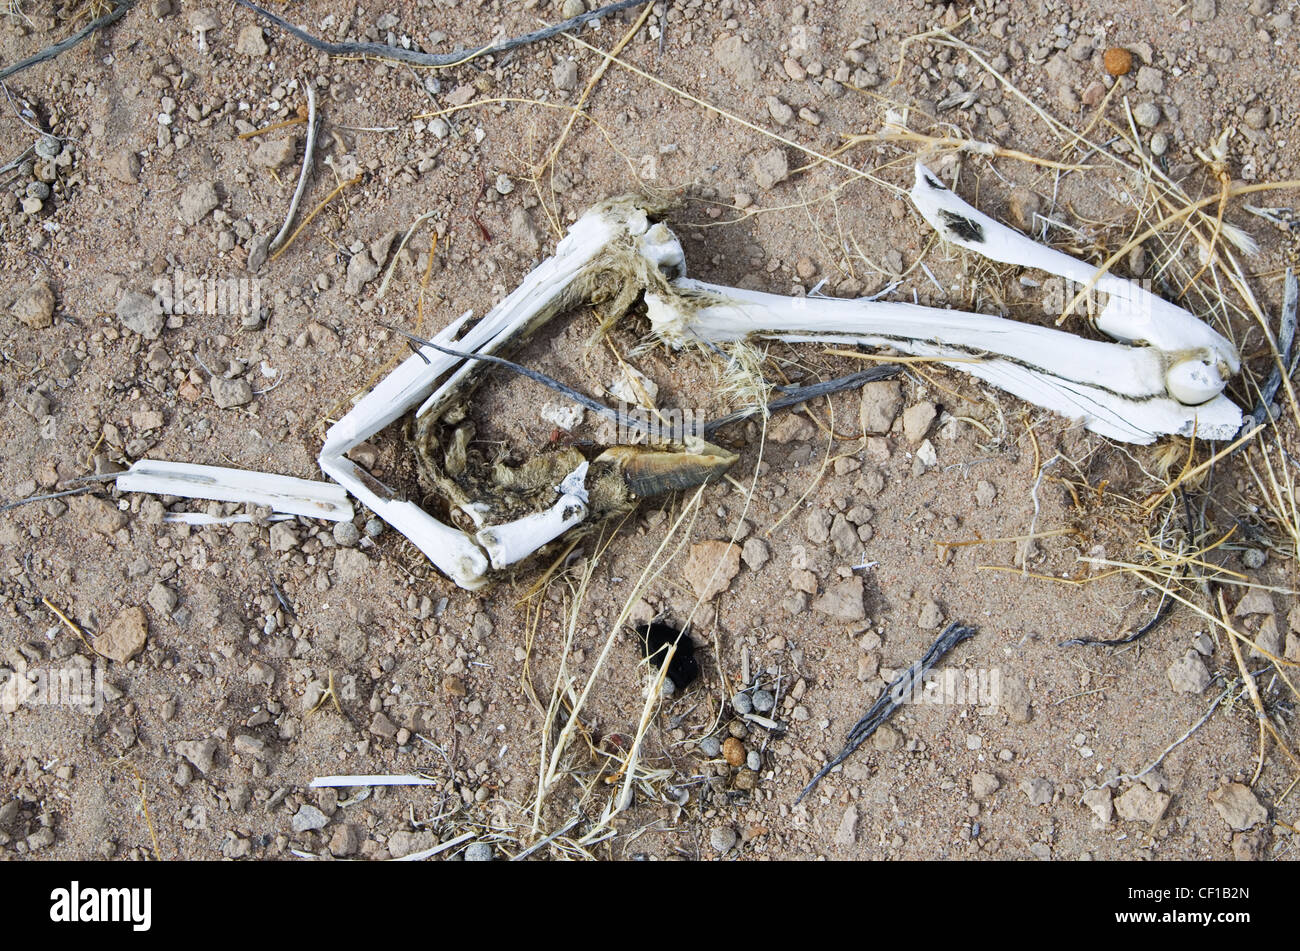 broken sheep leg bones and hoof on the ground in the desert Stock Photo